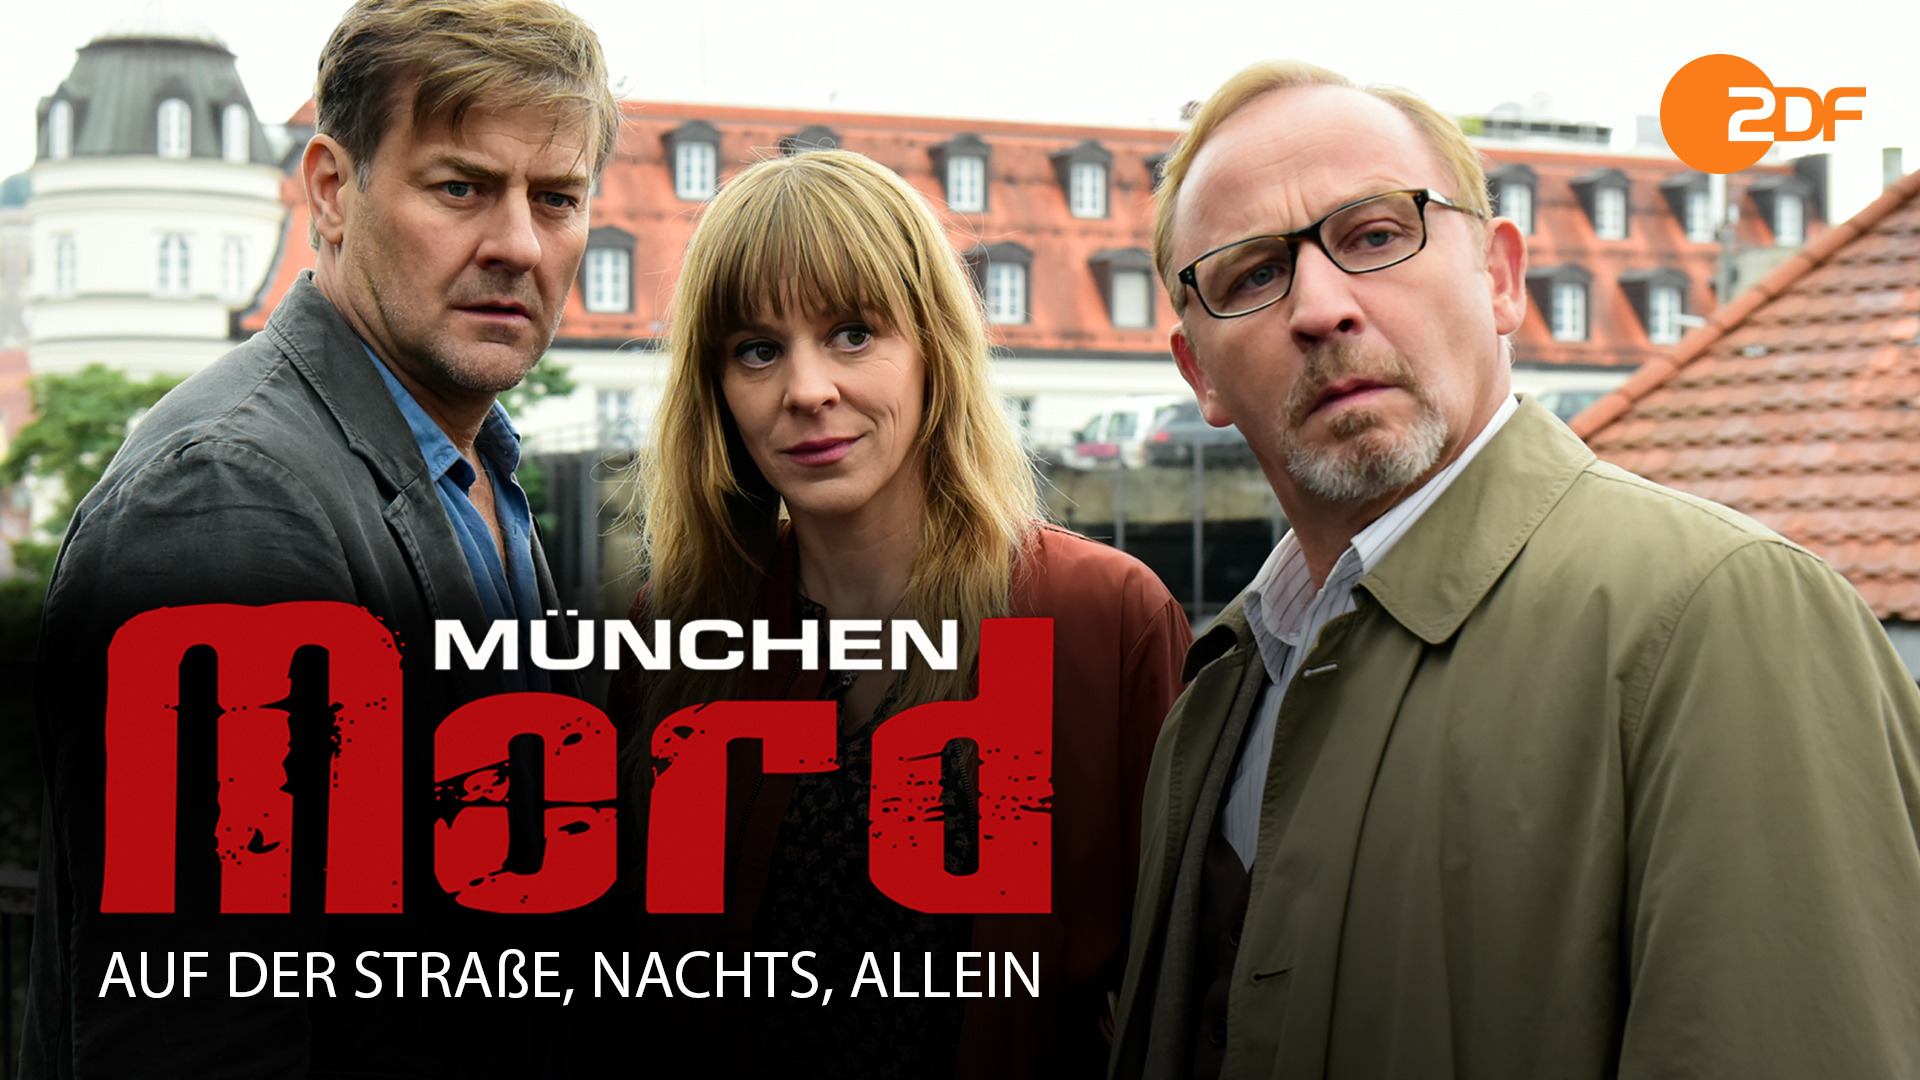 Show München Mord